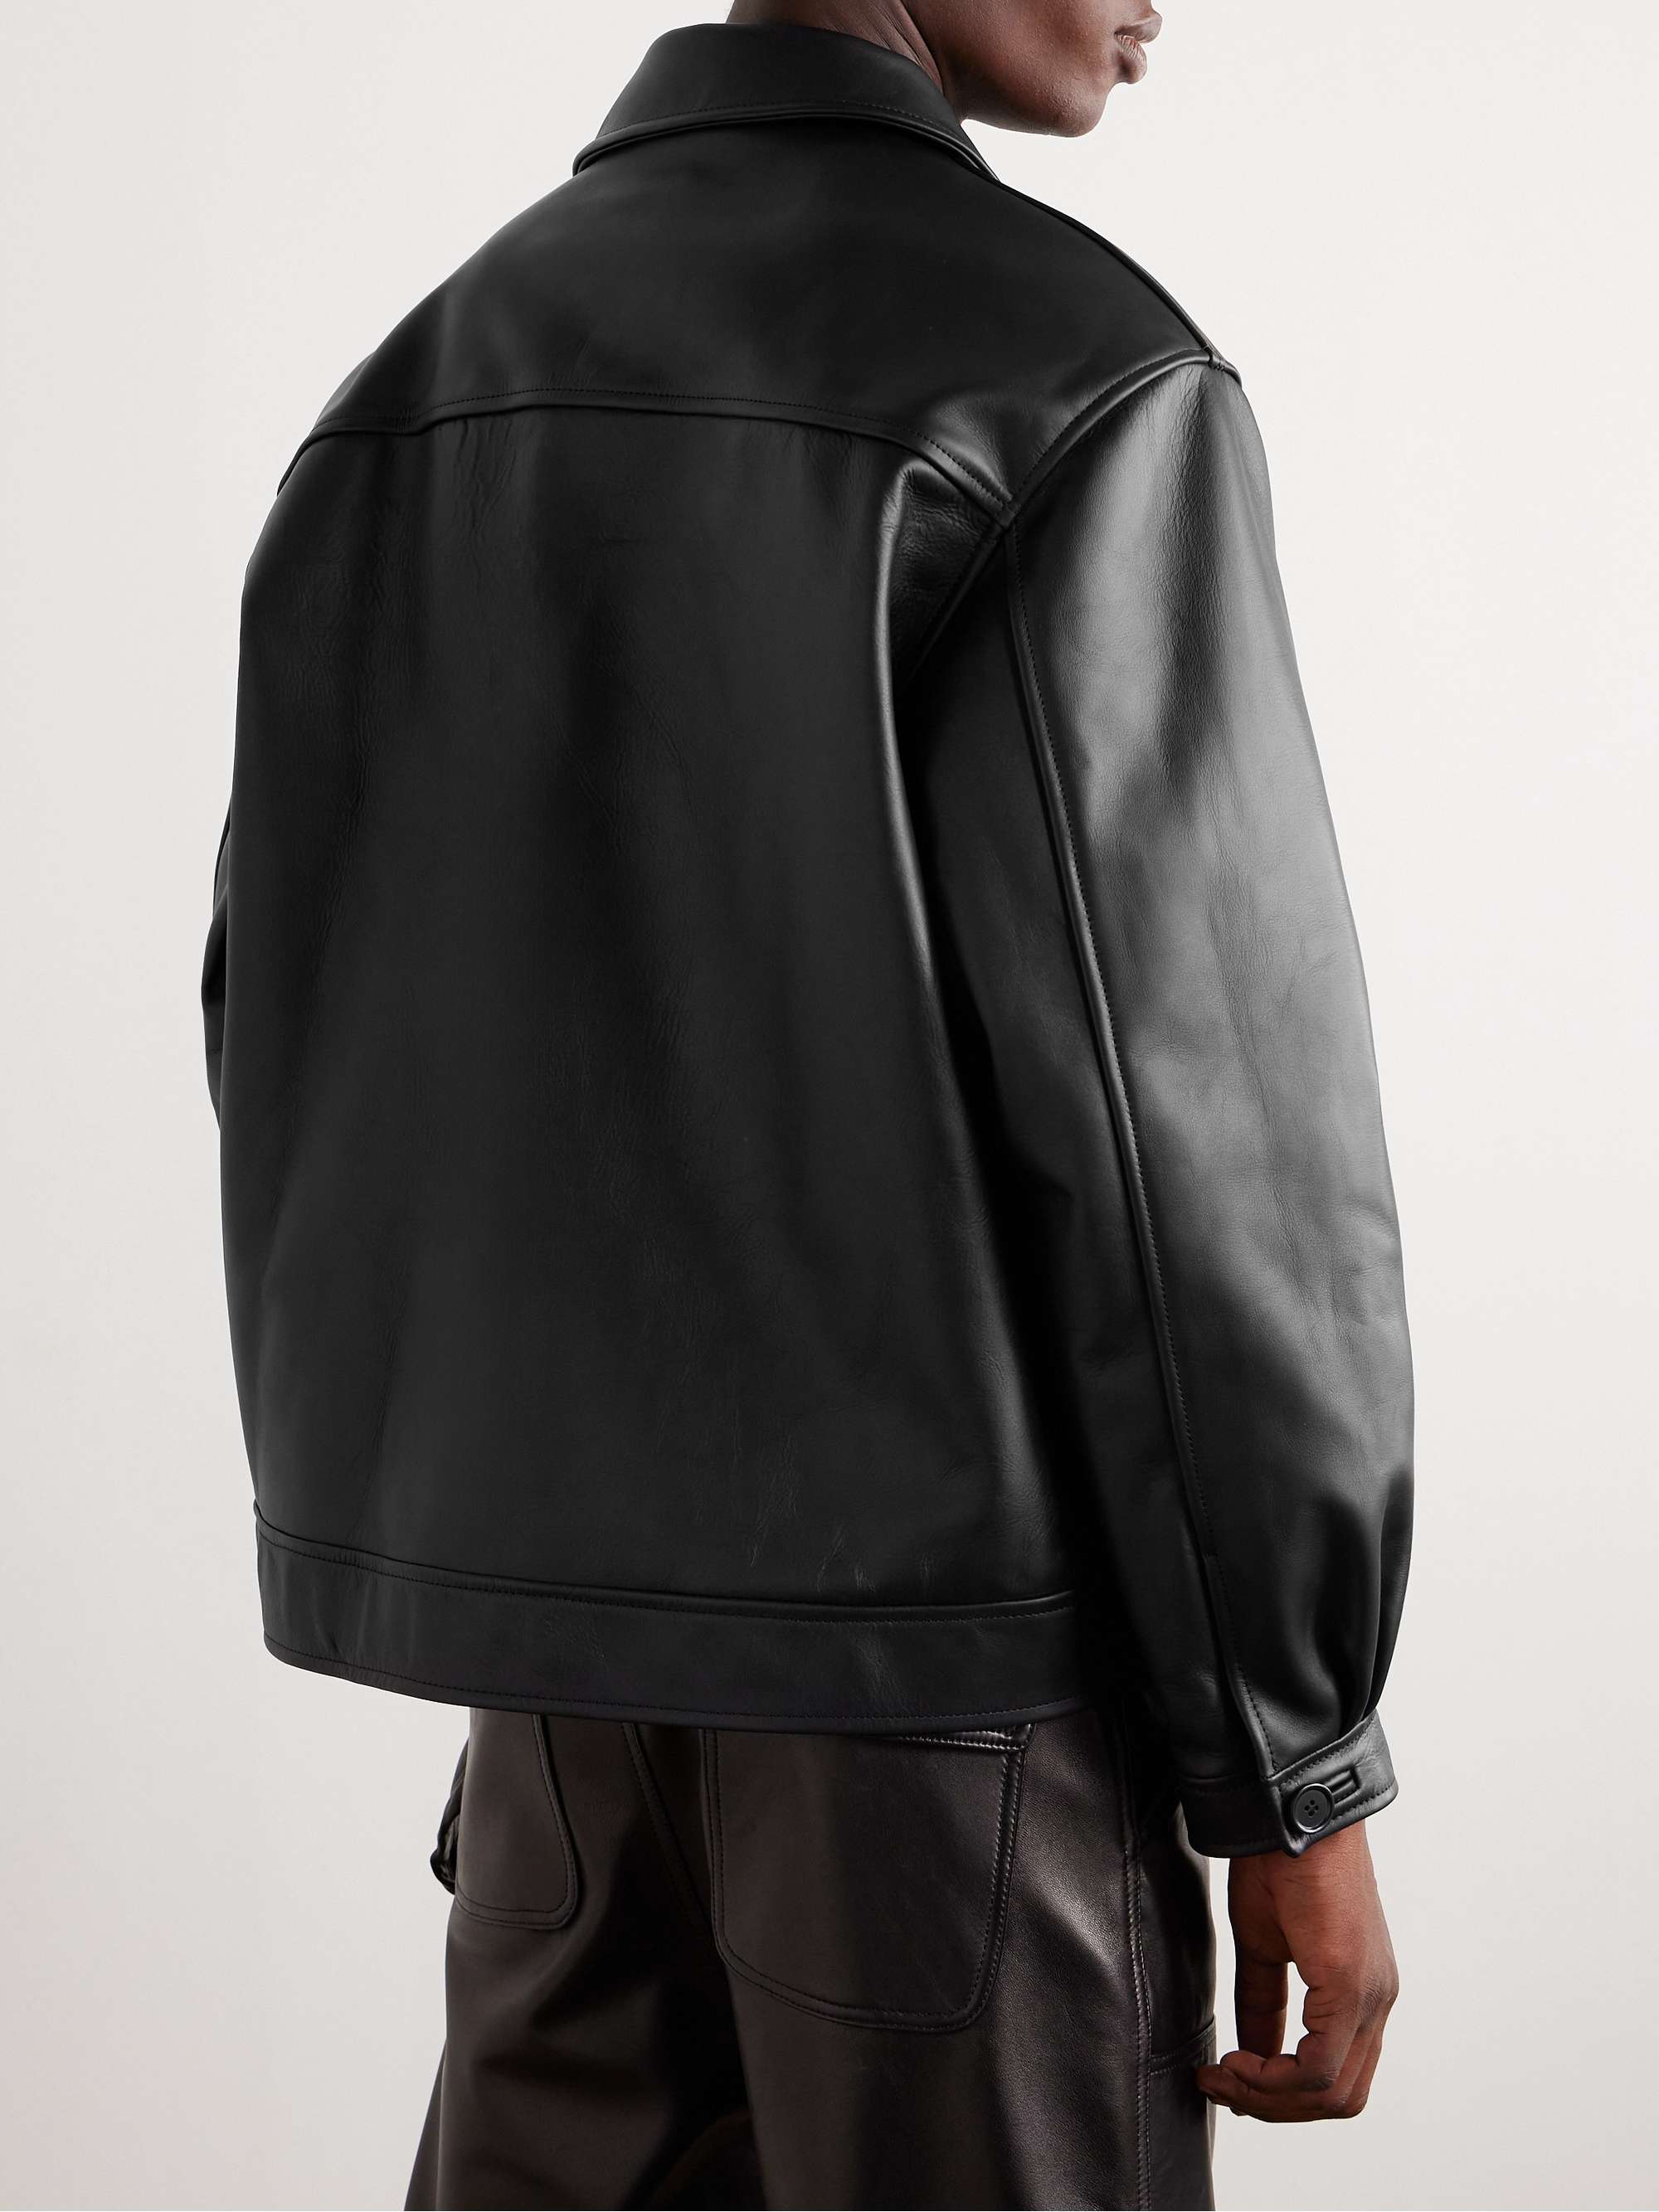 SIMONE ROCHA Macramé-Trimmed Leather Jacket for Men | MR PORTER